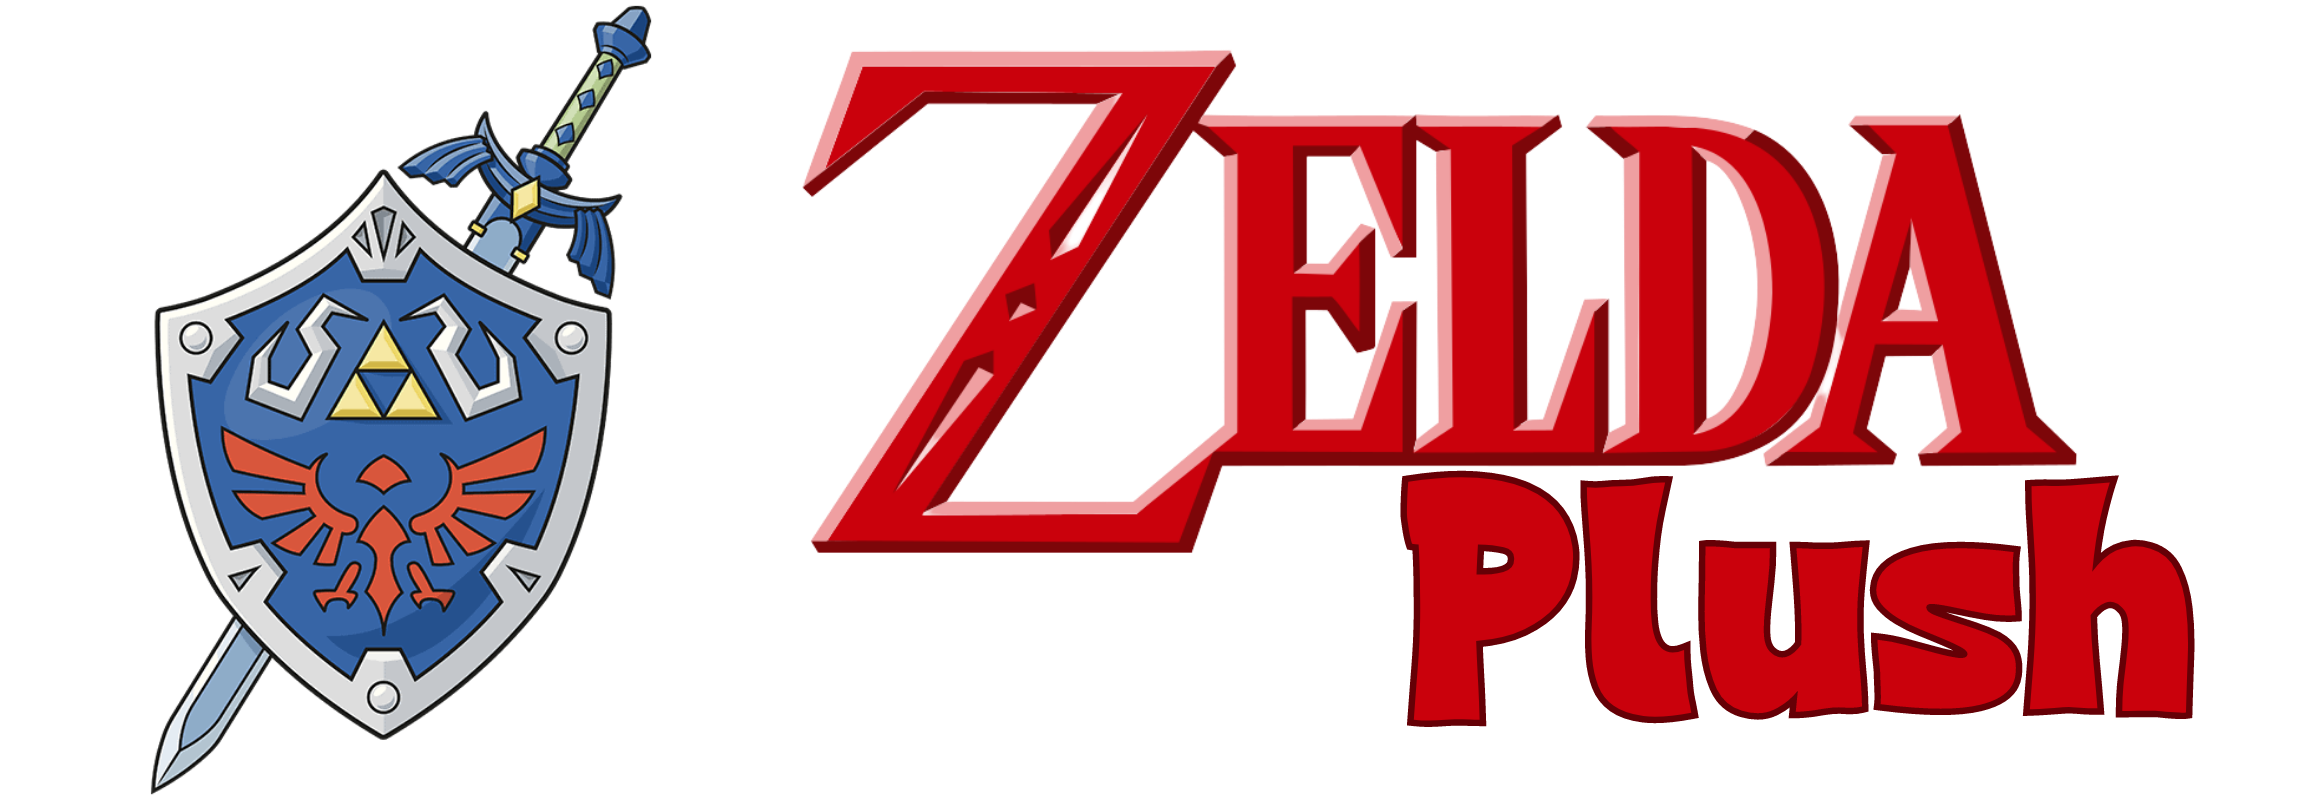 zelda plush logo - Zelda Plush